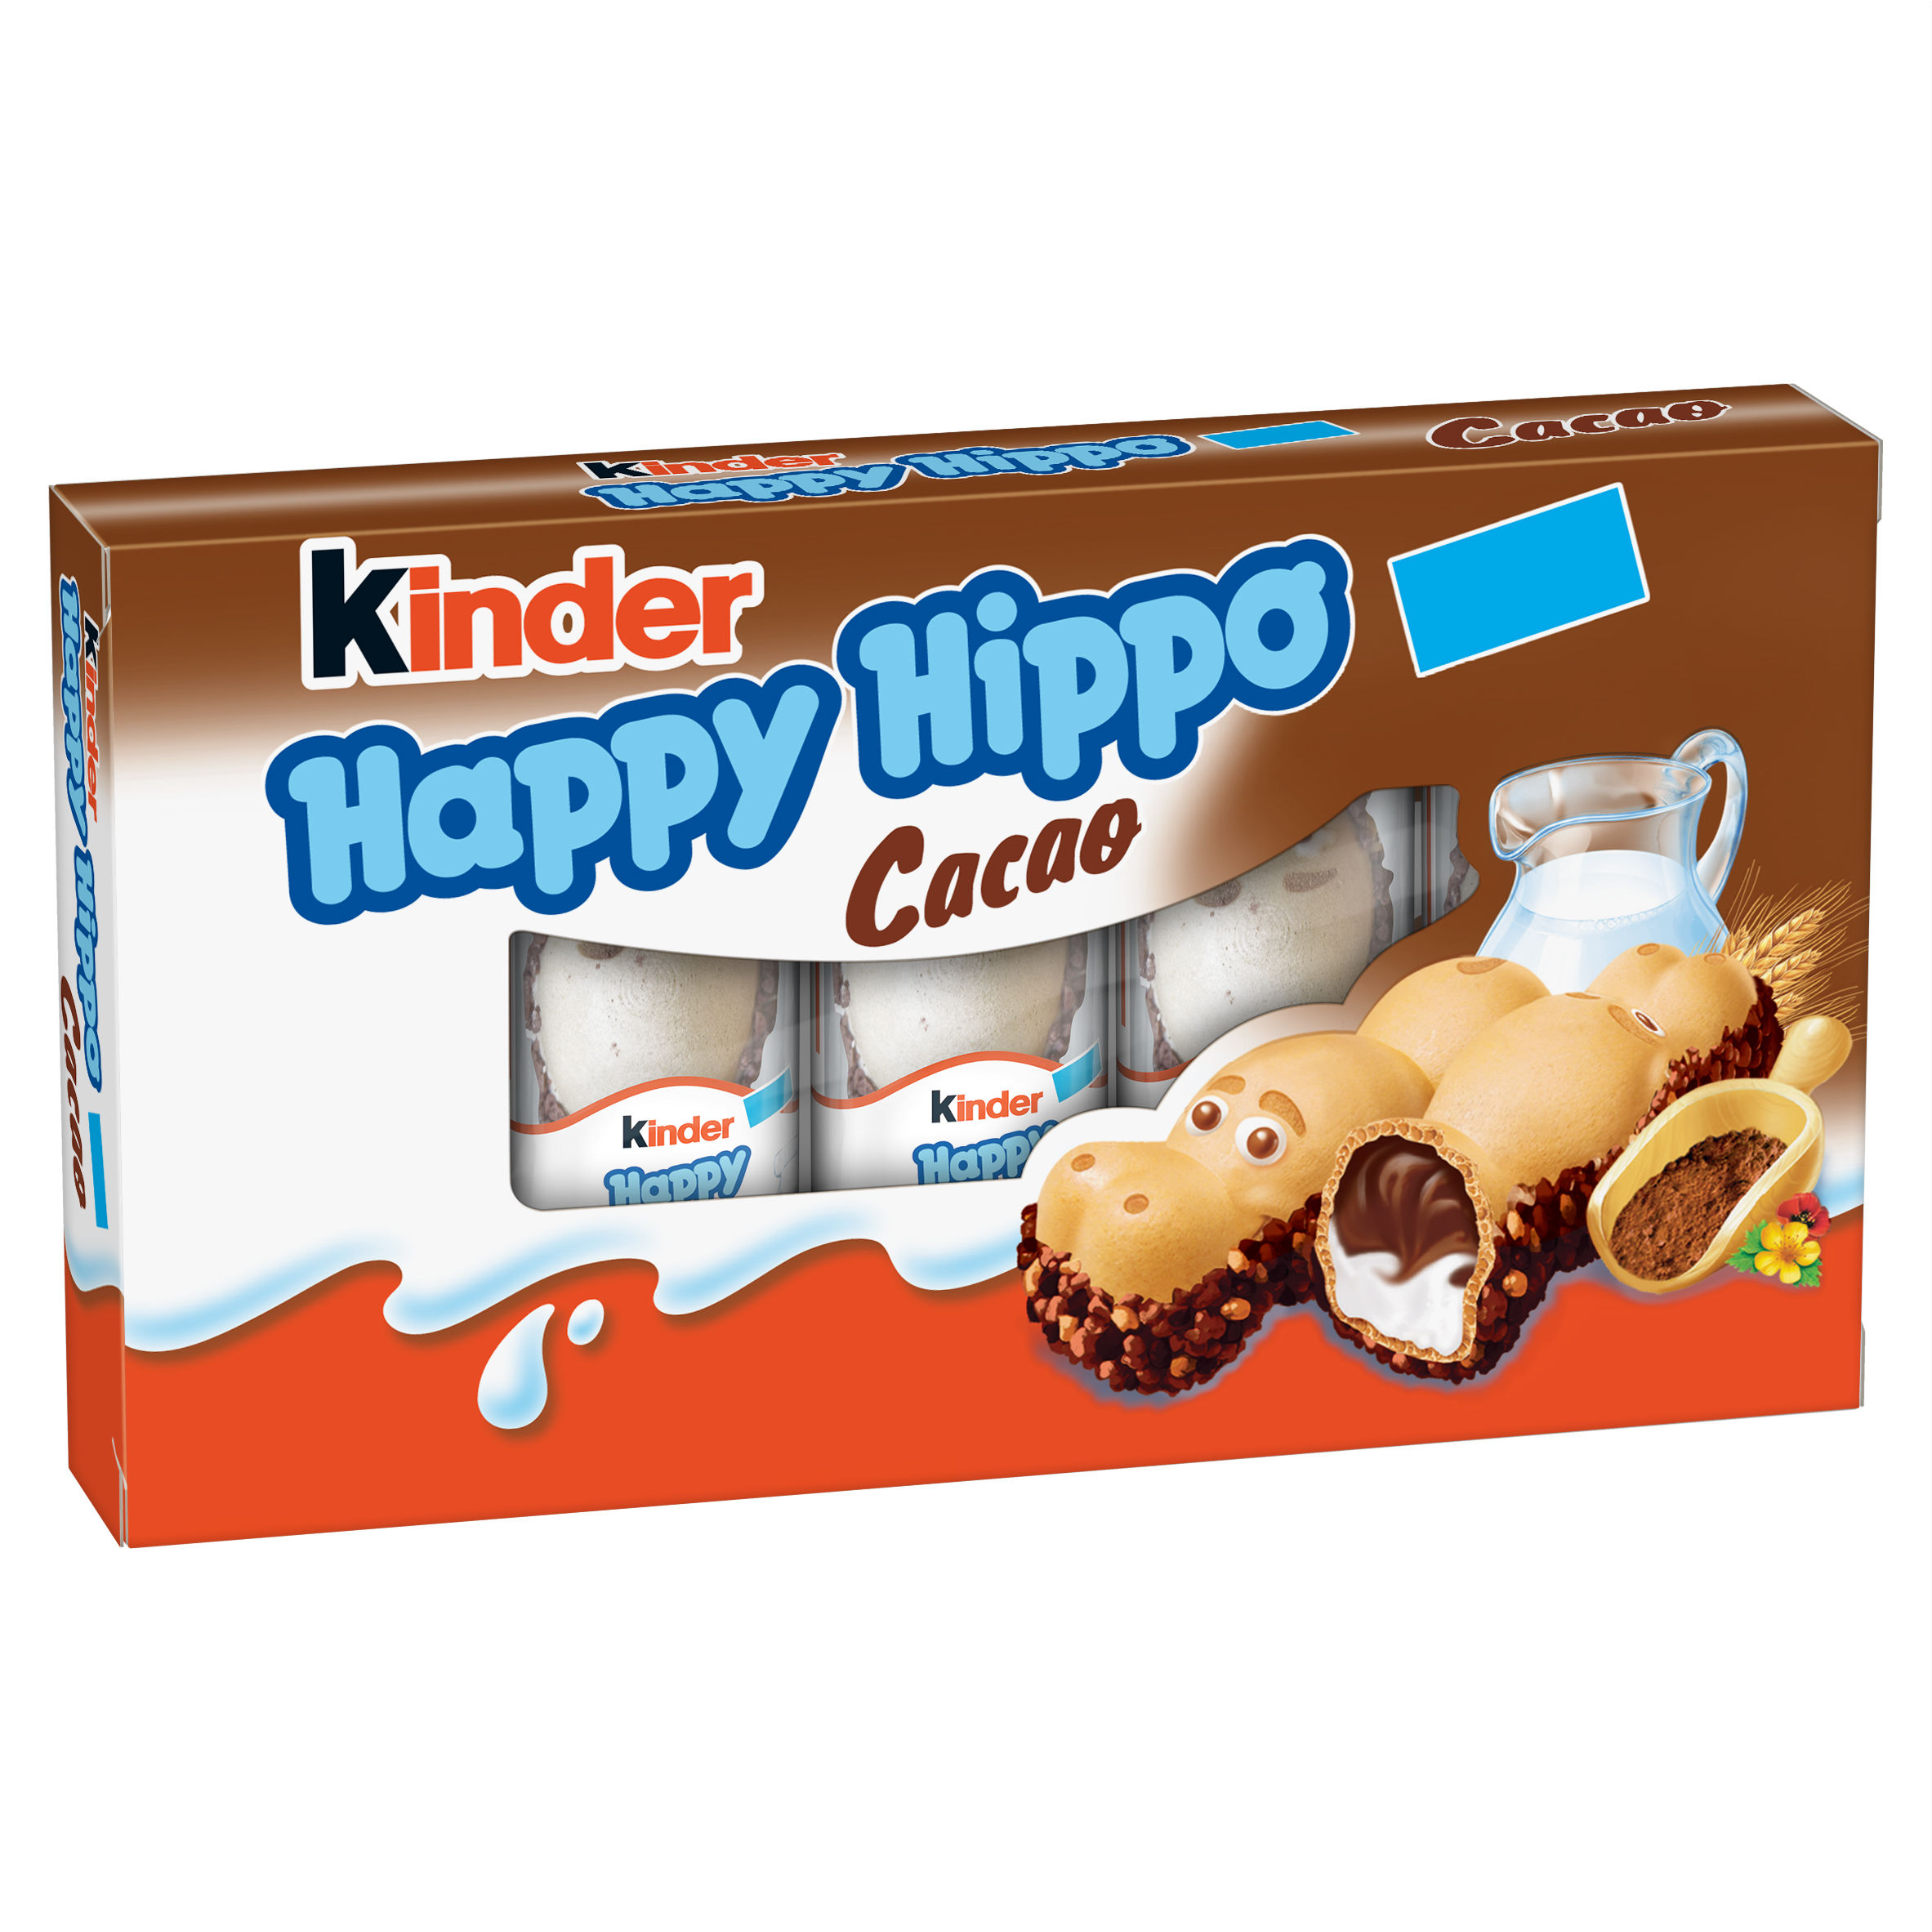 Киндер печенье. Kinder Happy Hippo какао. Kinder Happy Hippo 1 шт. Киндер Хэппи Хиппо 104гр. Конфеты kinder Happy Hippo Cacao.